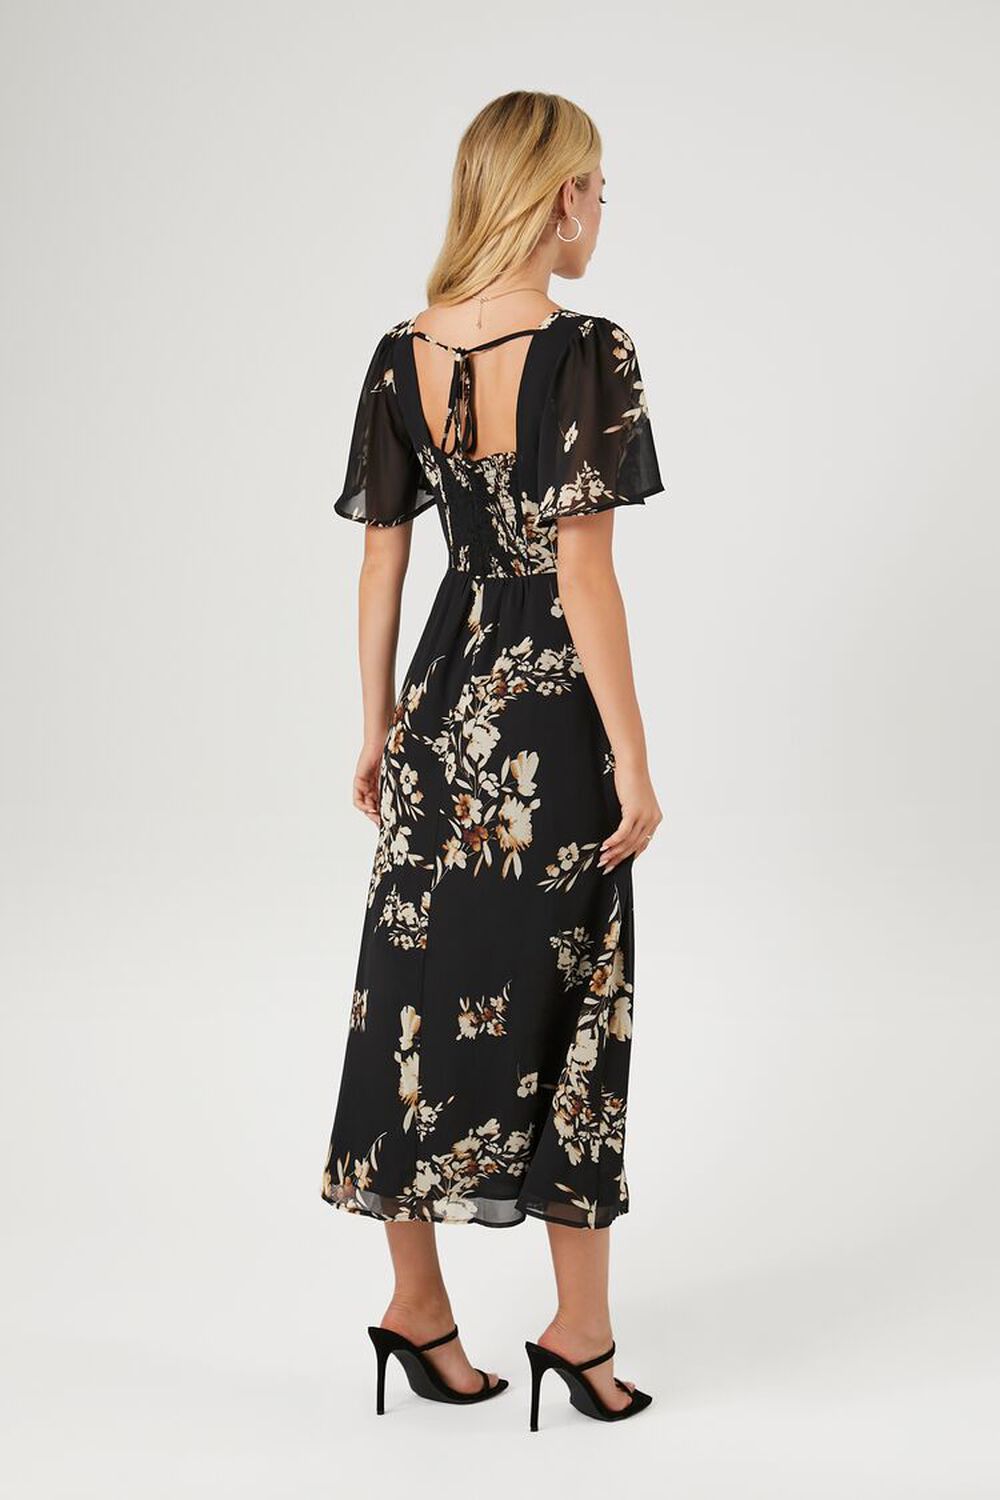 BLACK/MULTI Chiffon Floral Print Maxi Dress, image 3